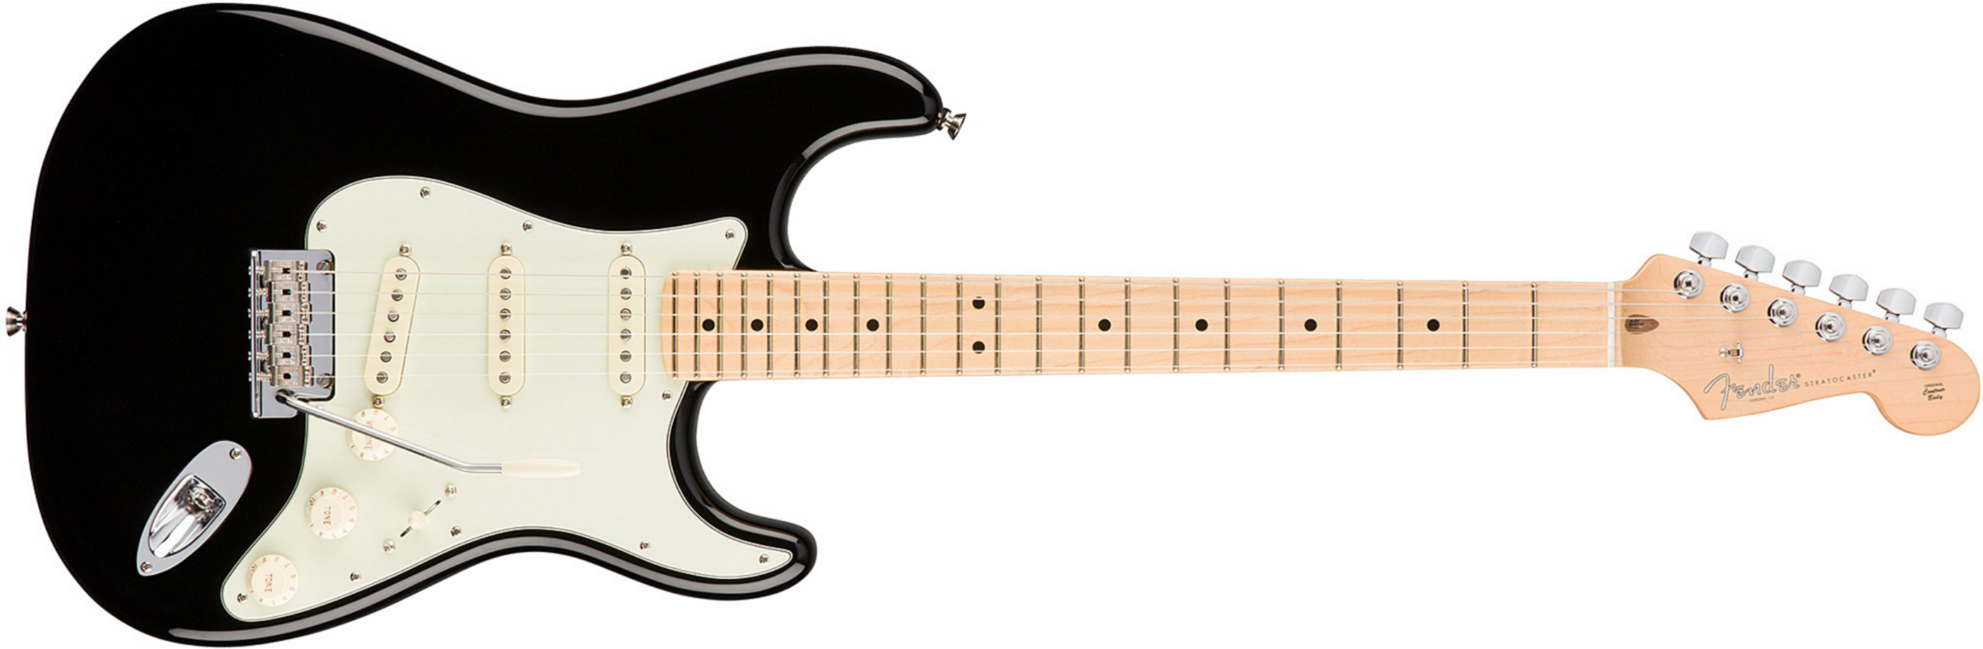 Fender Strat American Professional 2017 3s Usa Mn - Black - Guitare Électrique Forme Str - Main picture